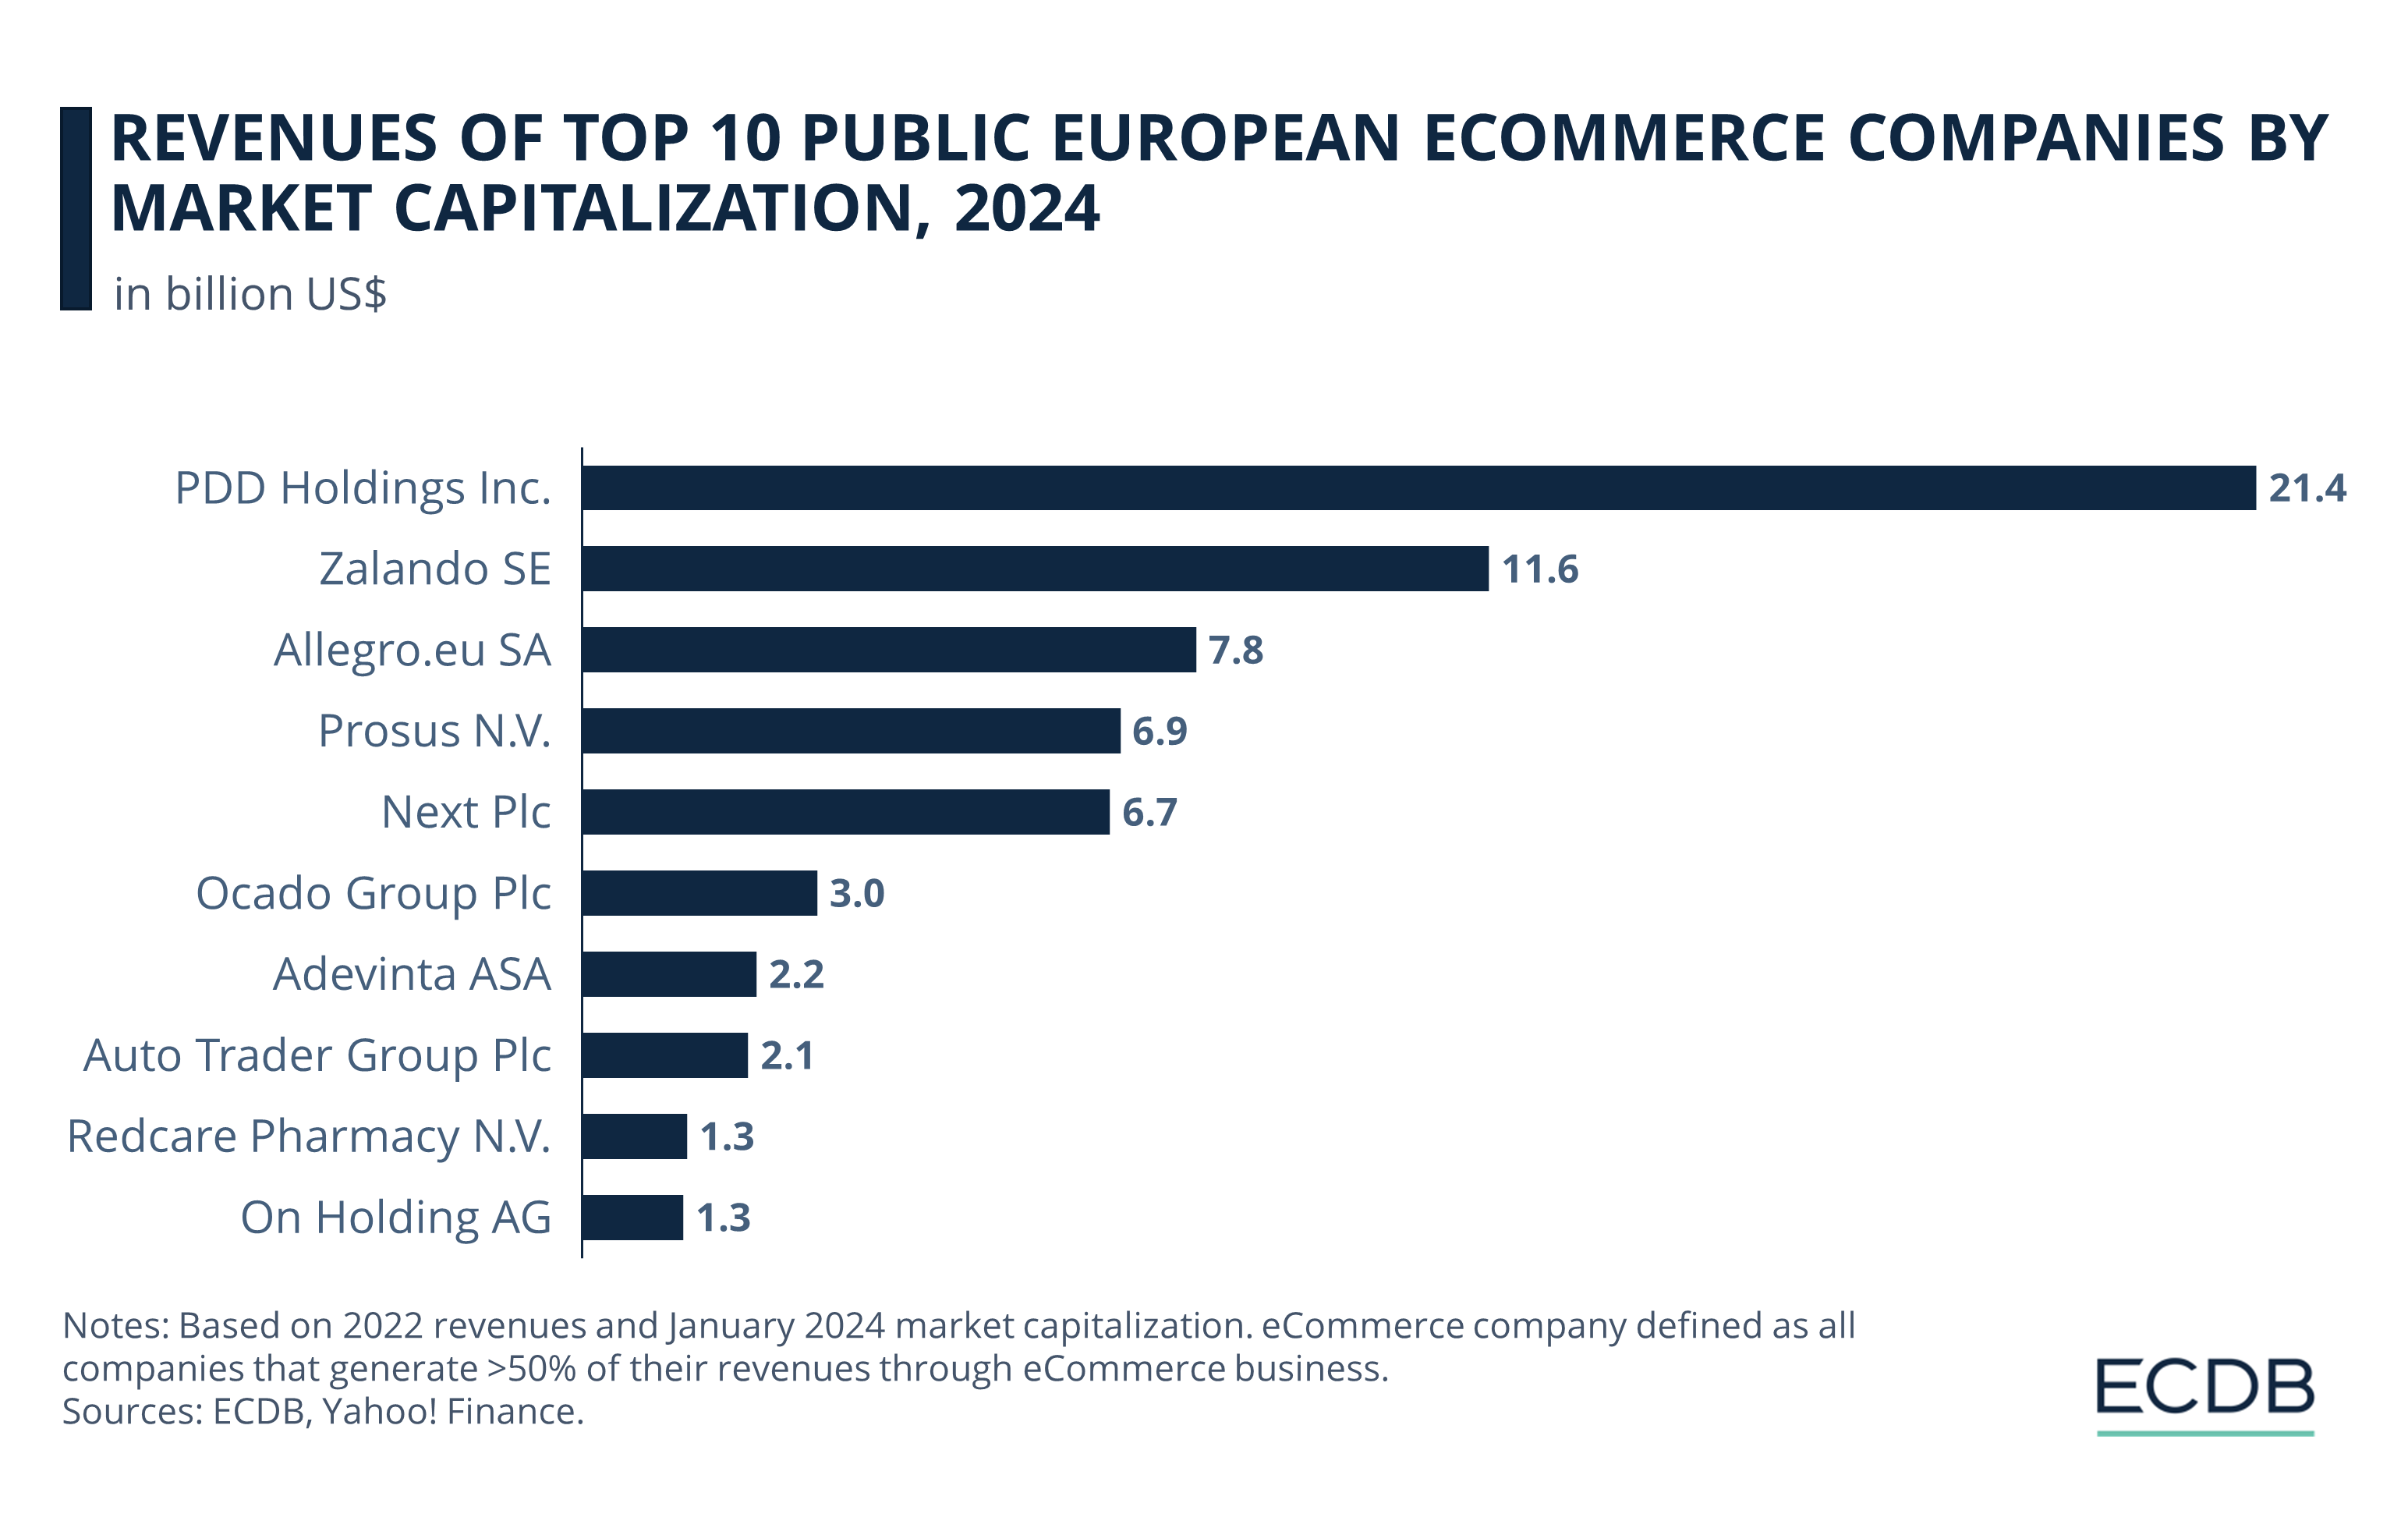 Revenues of Top 10 Public European eCommerce Companies by Market Capitalization, 2024